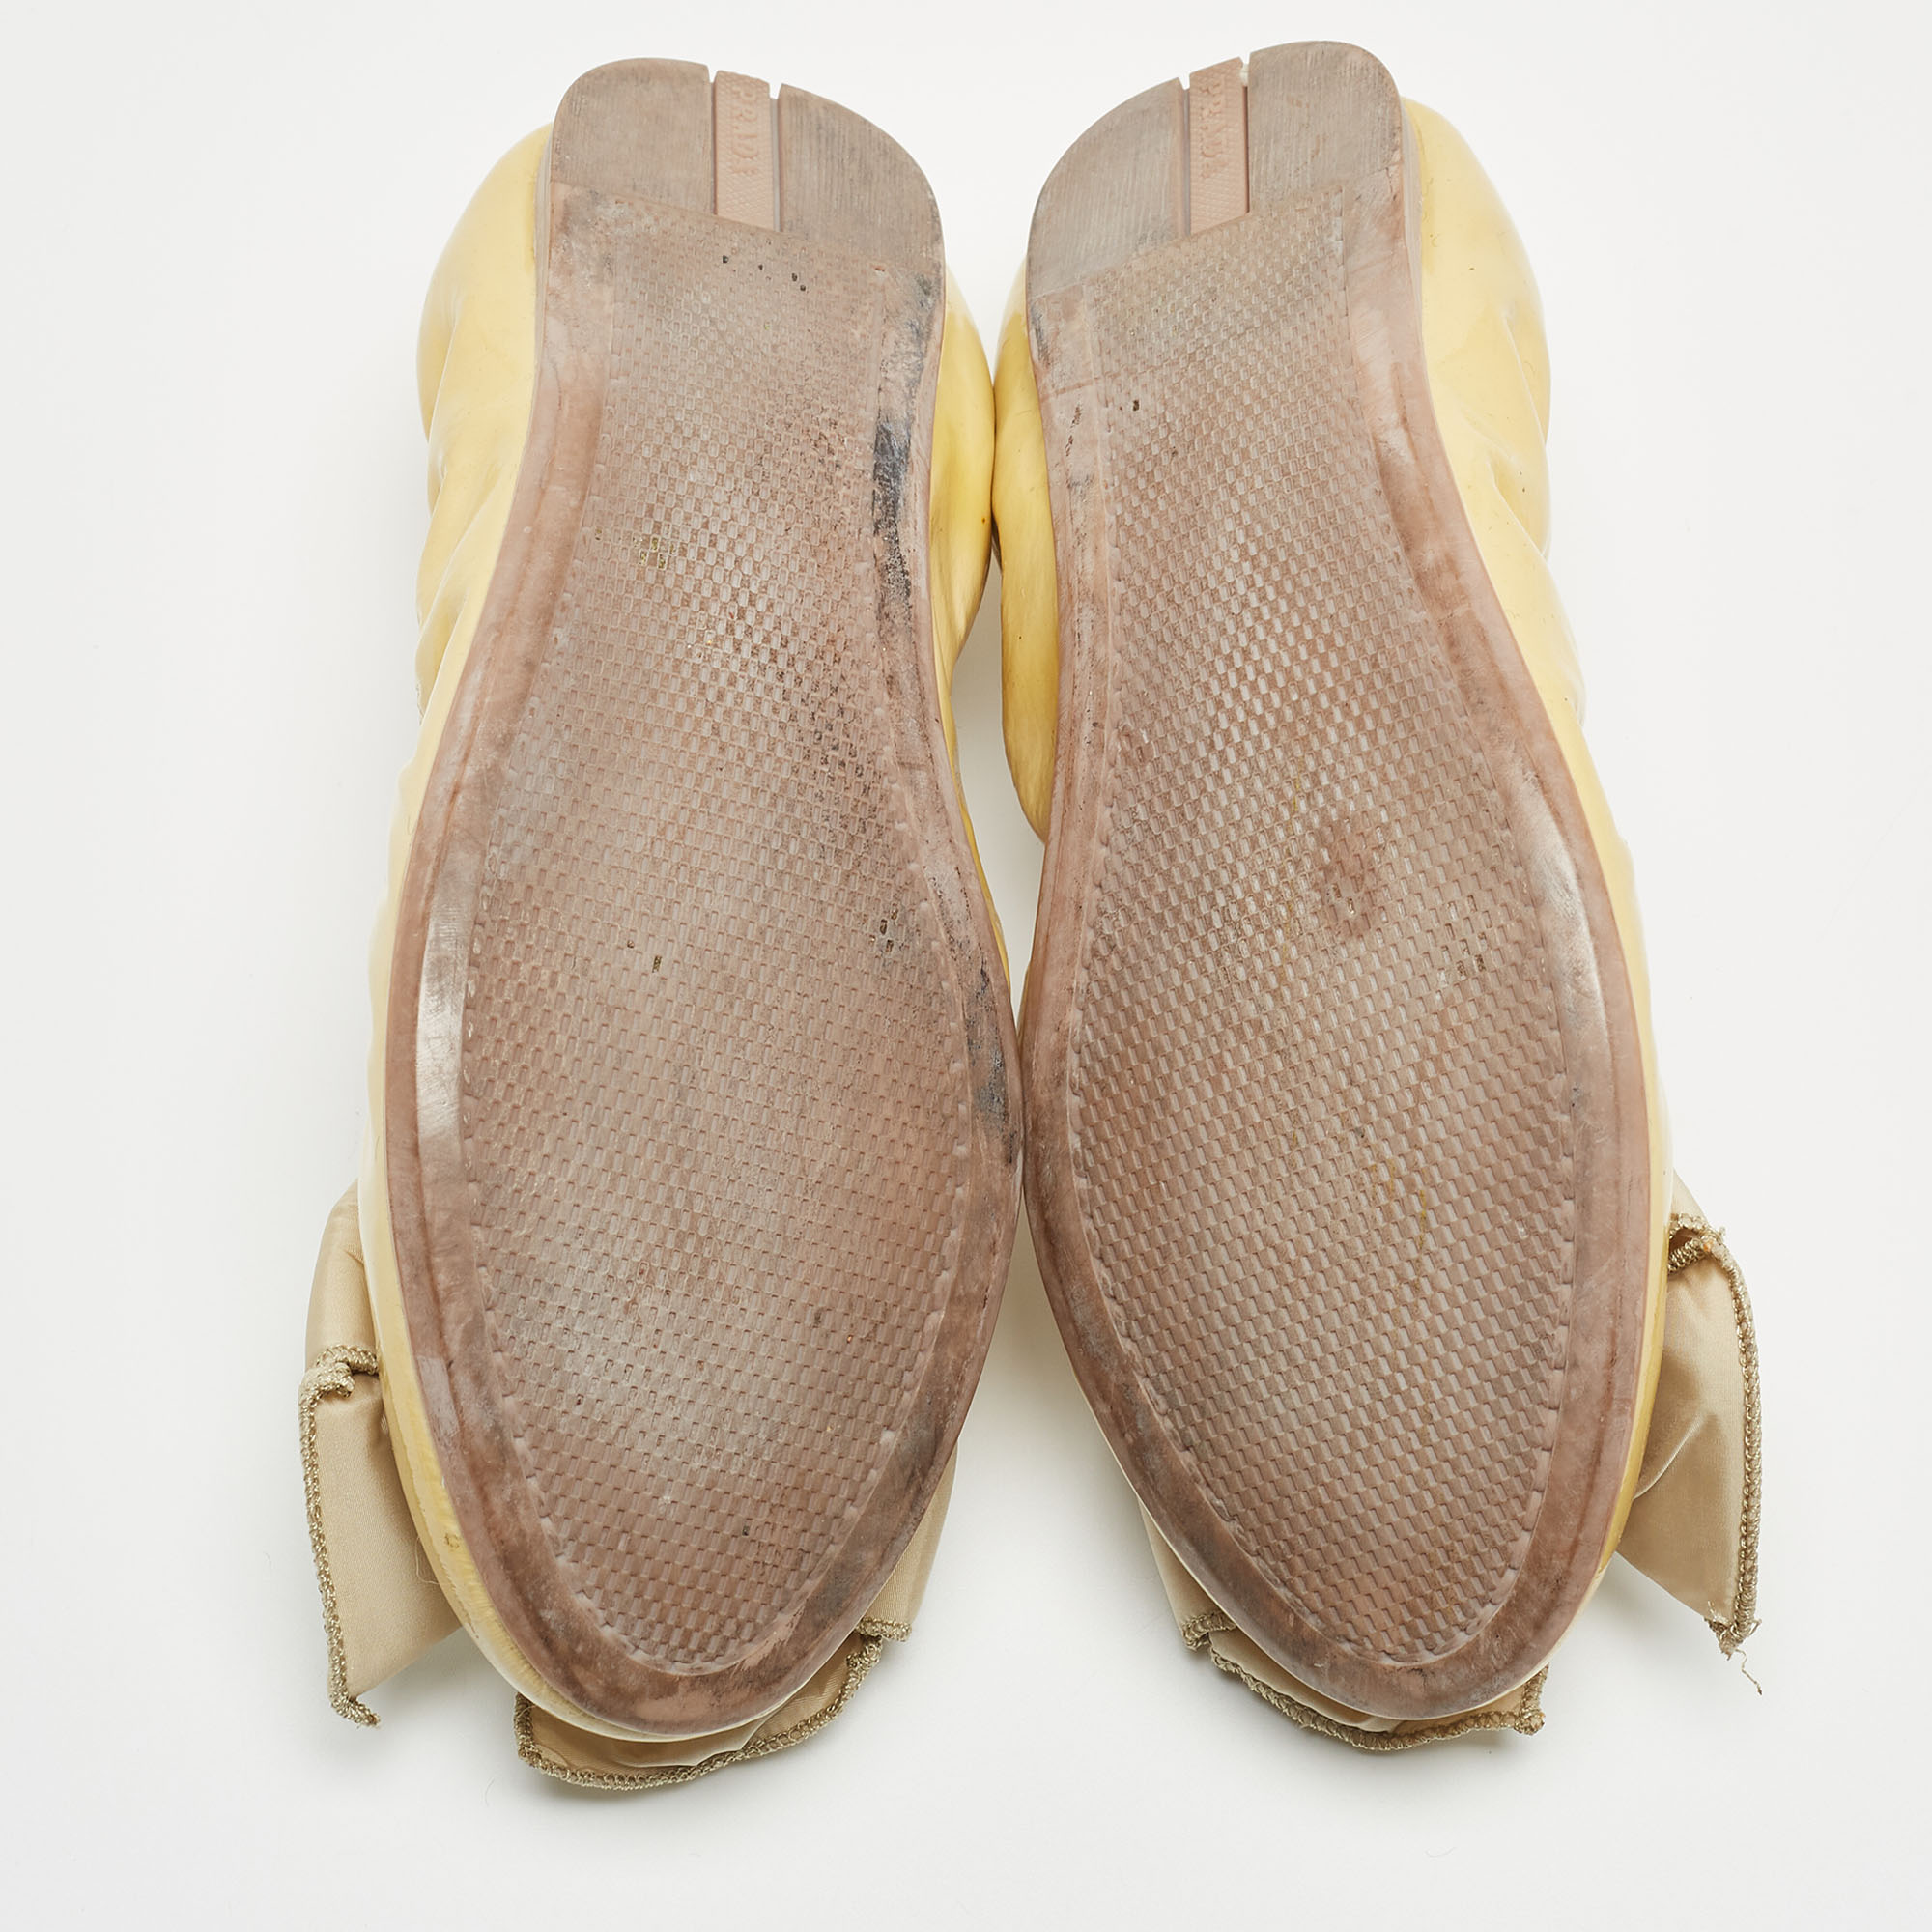 Prada Sport Yellow Patent Leather Bow Scrunch Ballet Flats Size 36.5